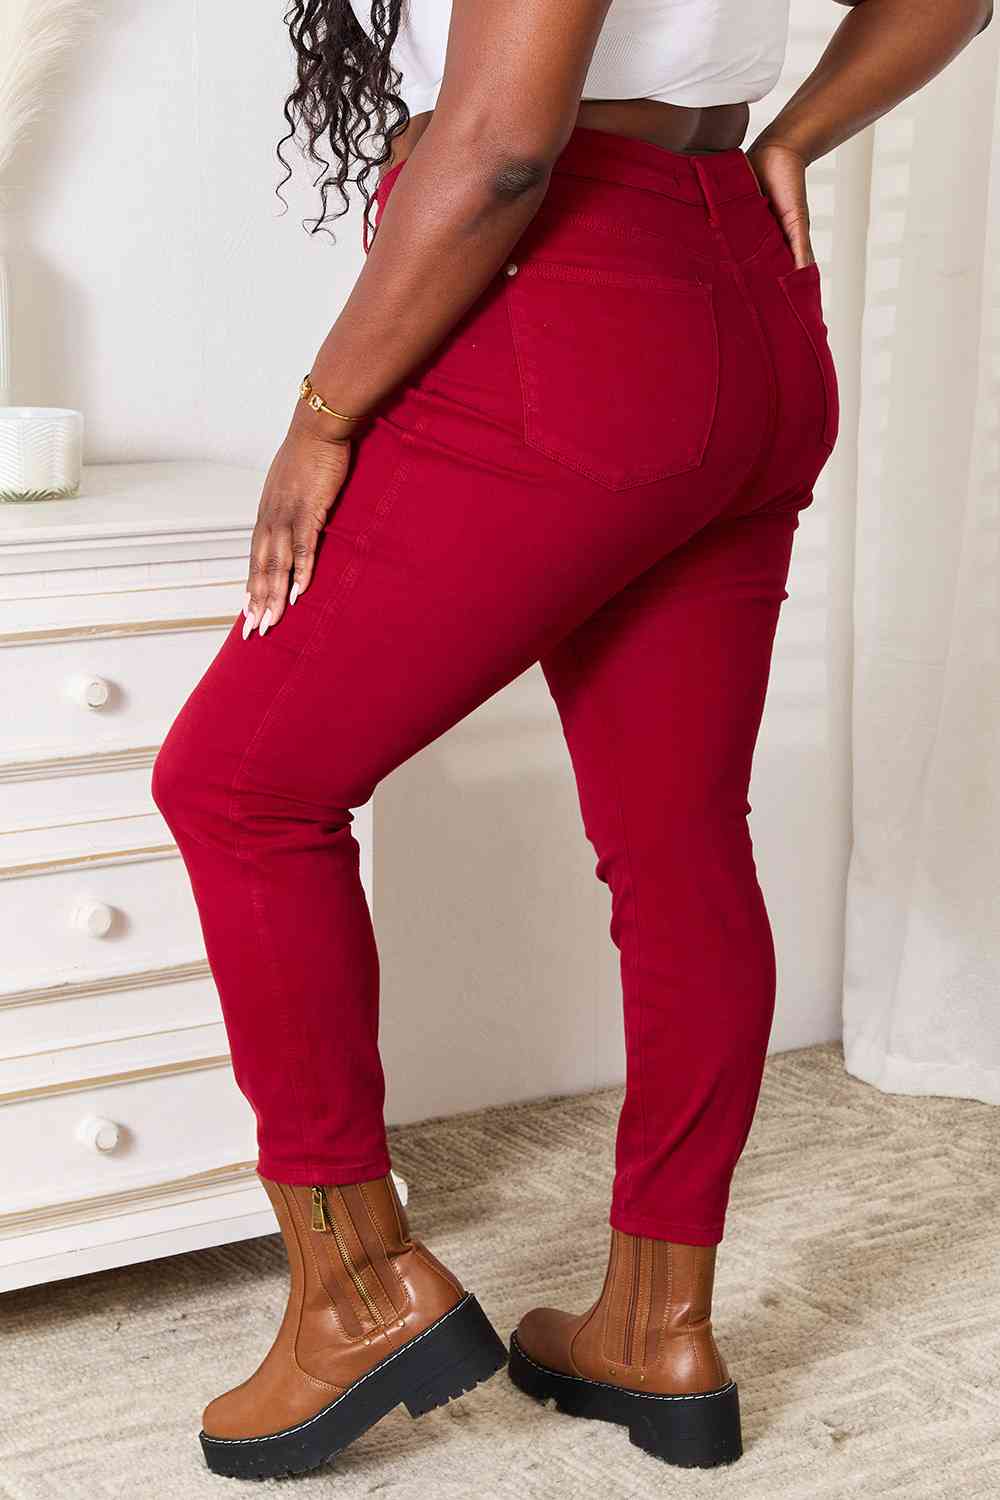 Judy Blue Full Size High Waist Tummy Control Skinny Jeans in Red - Tigbuls Variety Fashion